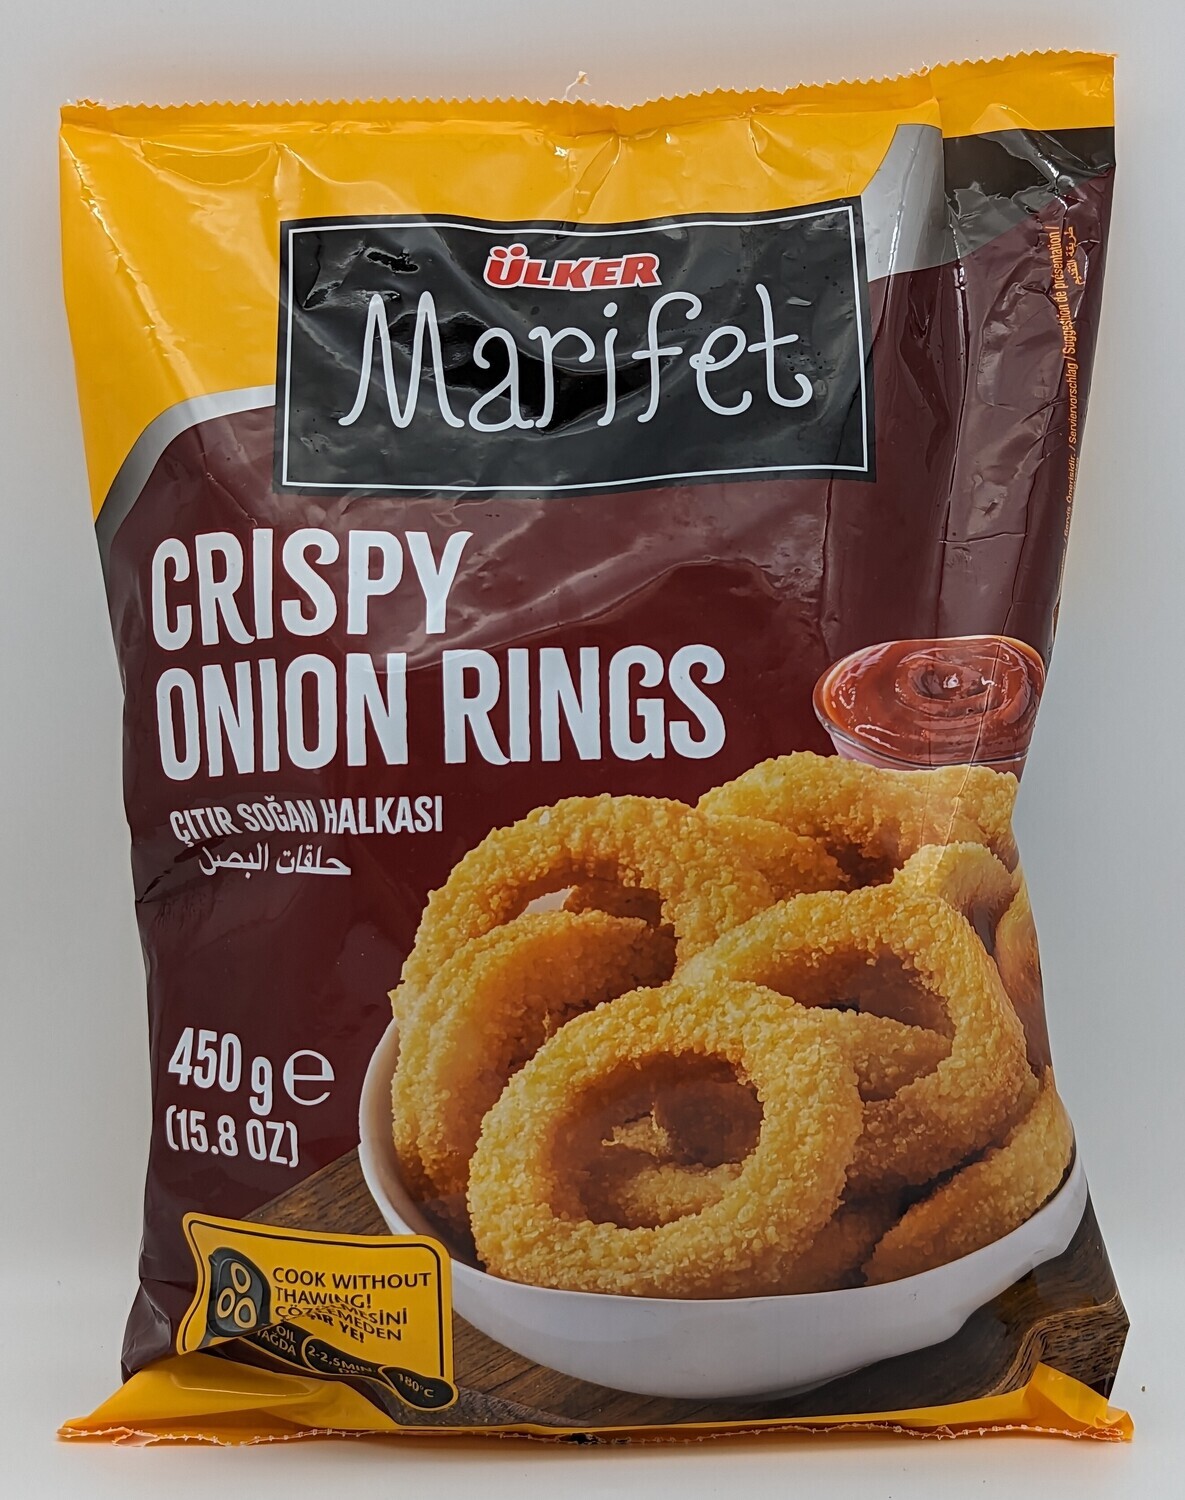 ULKER Marifet Crispy Onion Rings - Citir Sogan Halkasi 450g